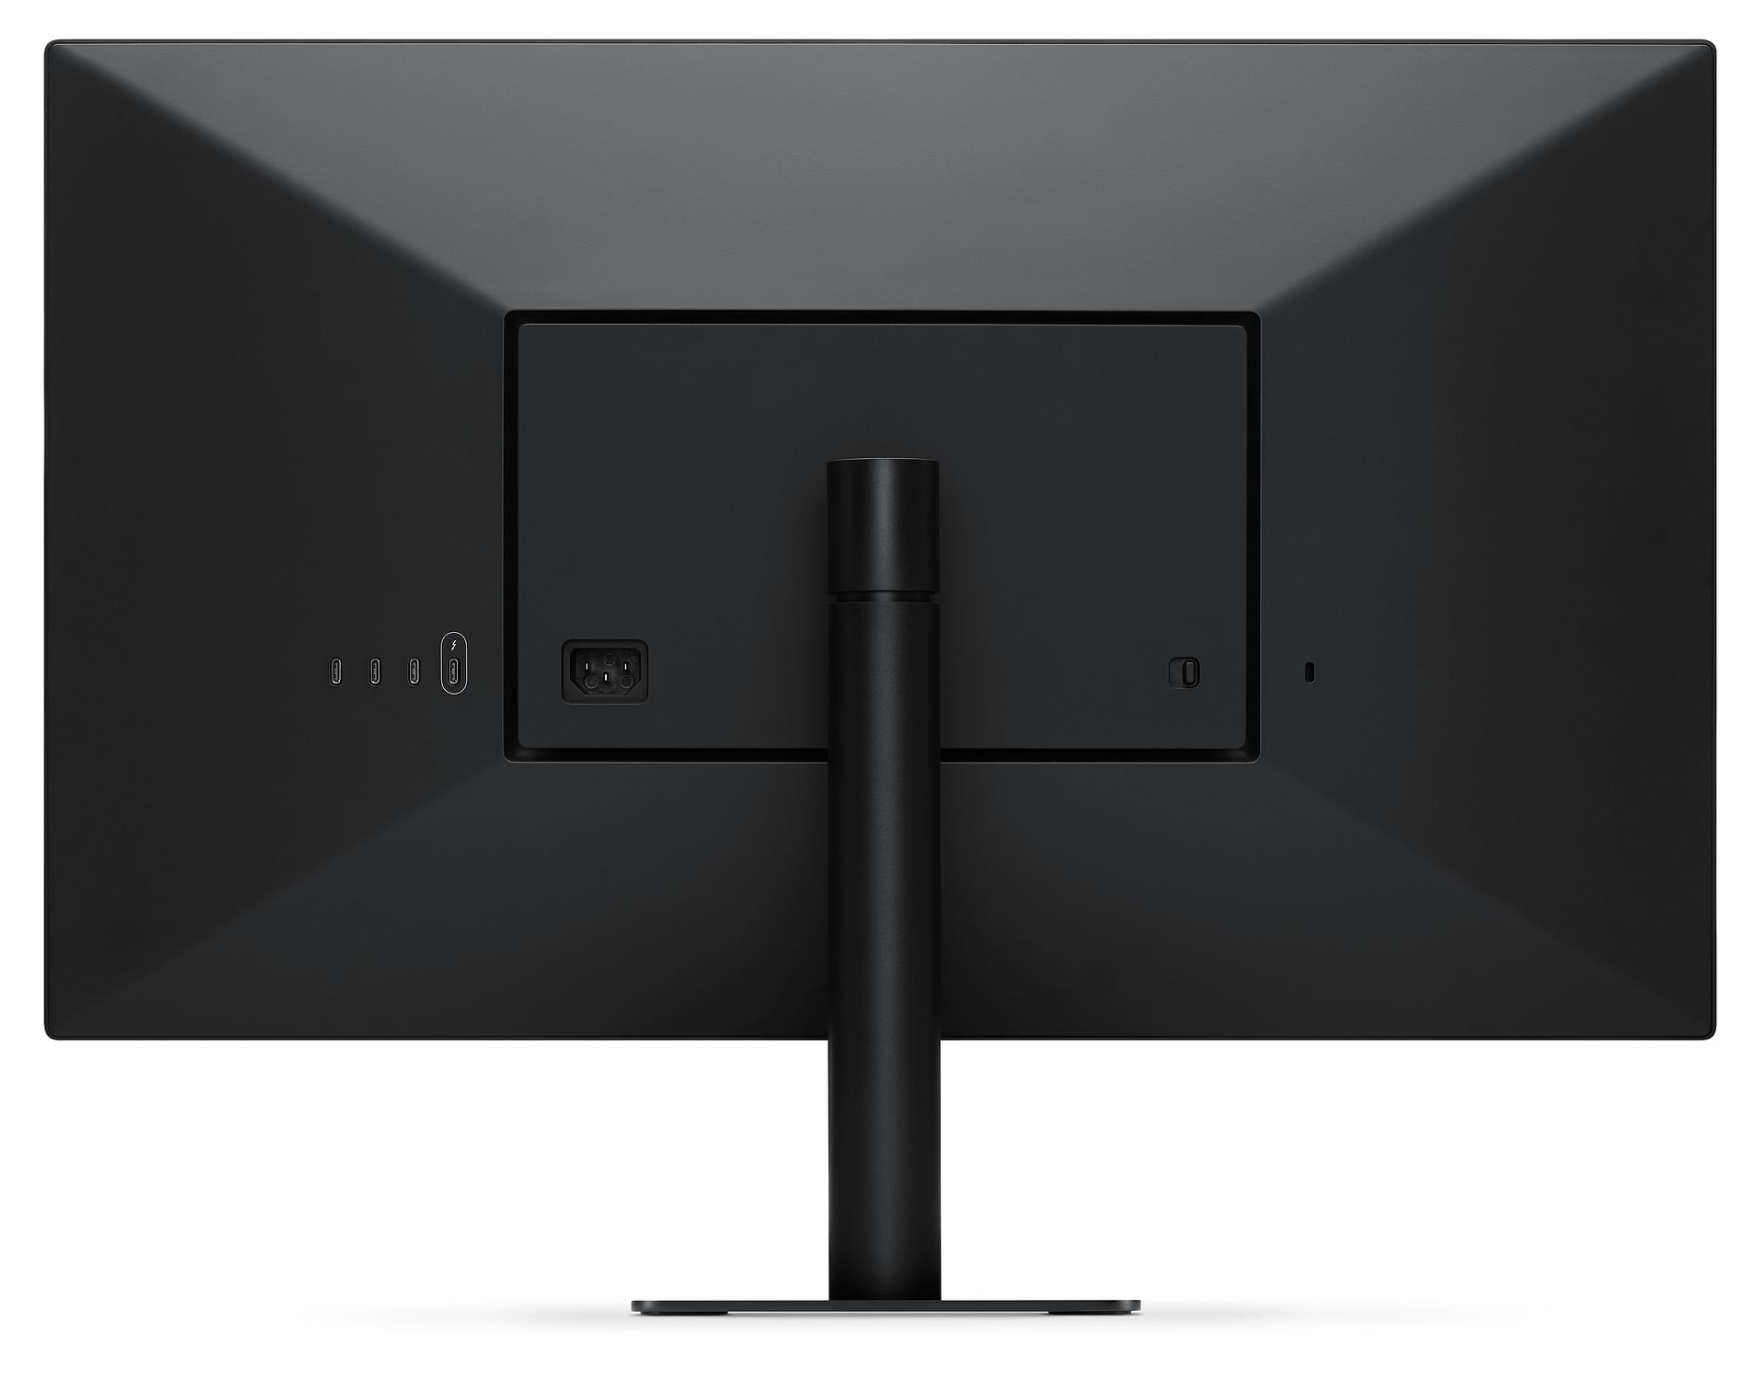 LG 5K Monitor - Ports